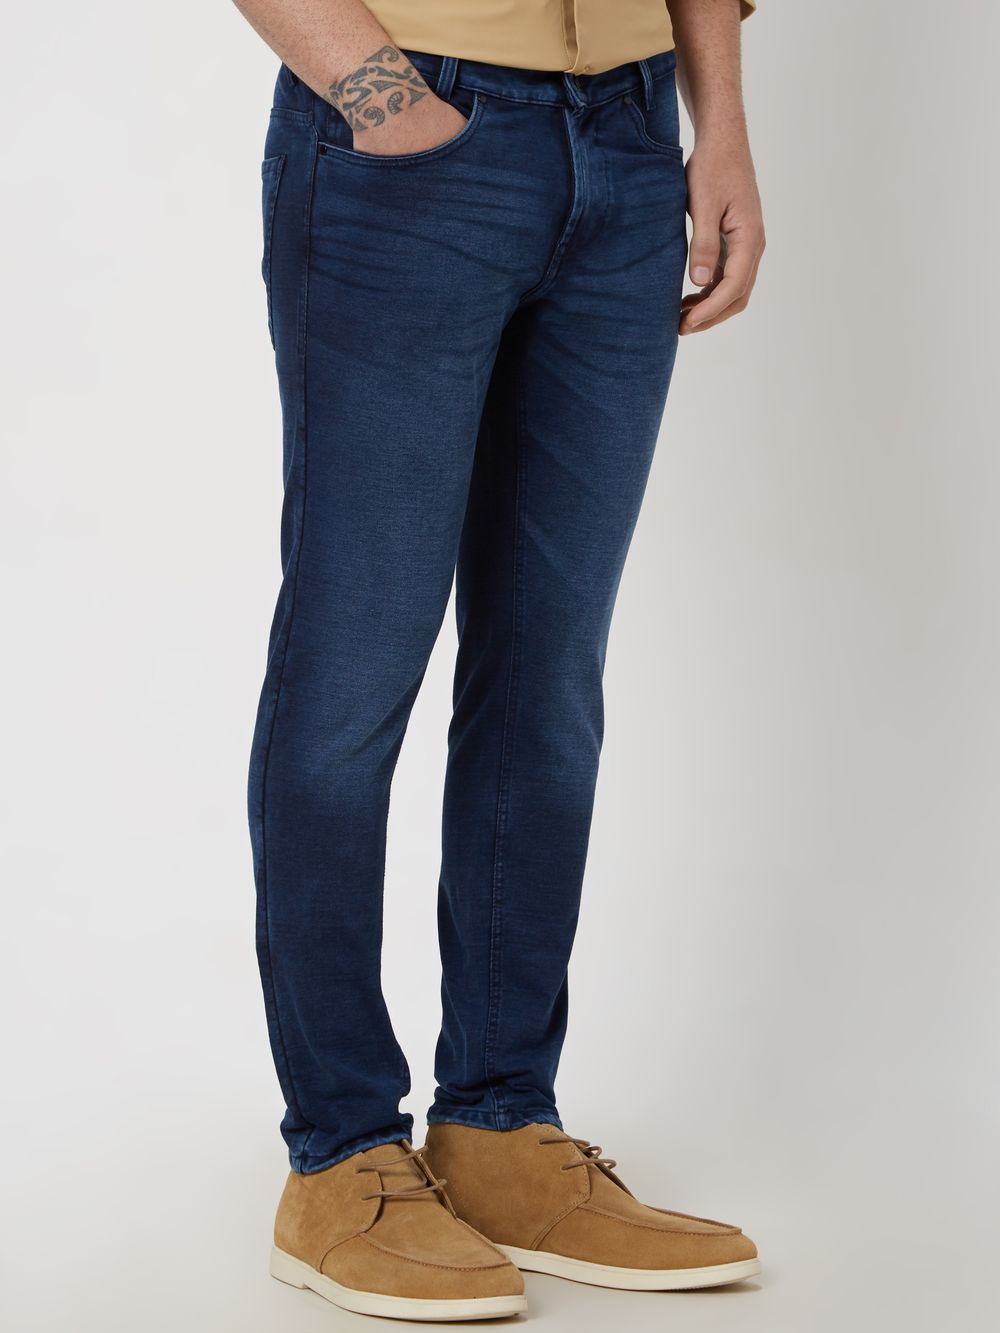 Dark Indigo Blue Ankle Length Jeans